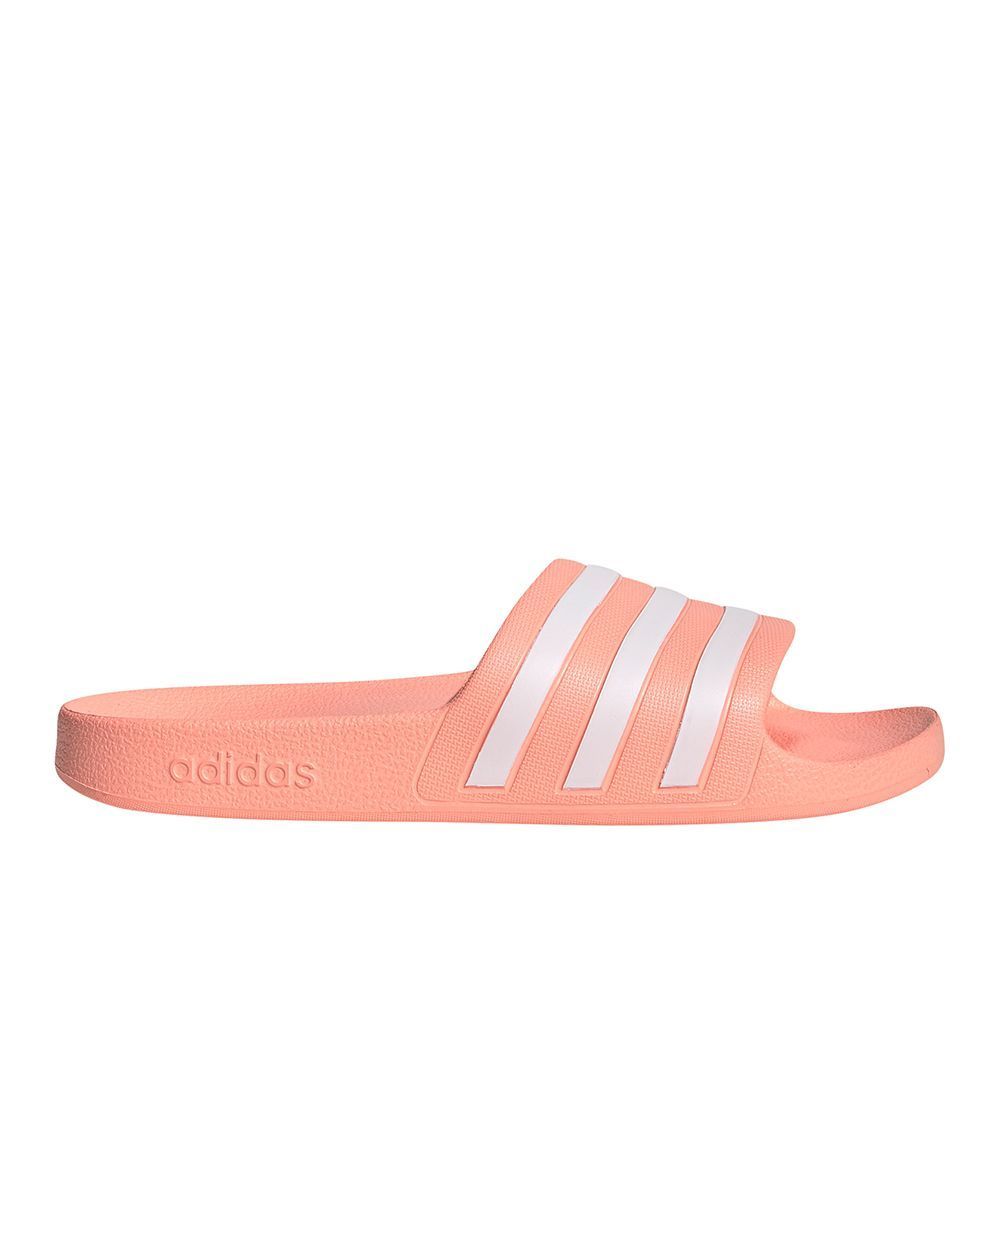 Adidas Adilette Aqua Sliders for Women (Pink) - 36 EU | Buy Footwear online  | Best price and offers | KSA | HNAK.com